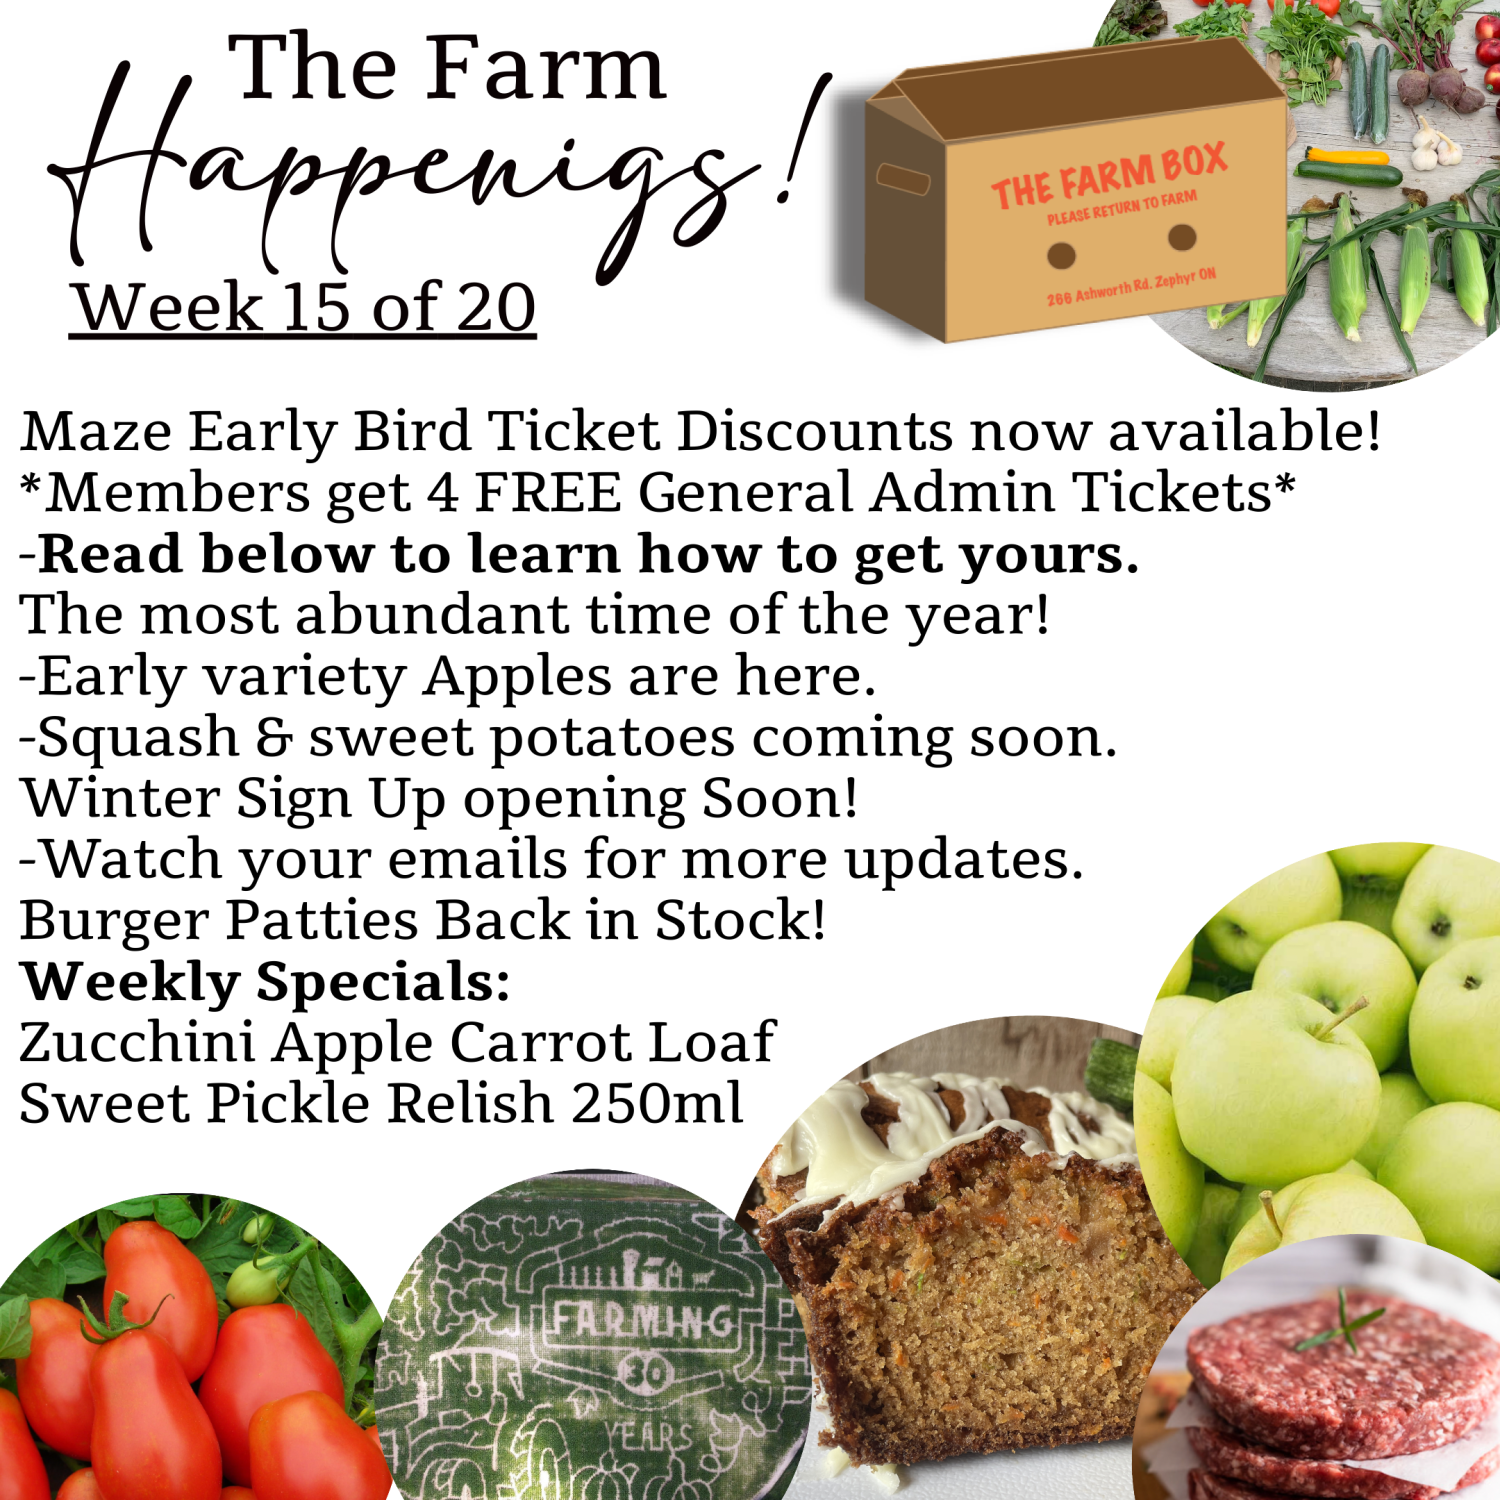 Next Happening: "The Farm Box"-Coopers CSA Farm Farm Happenings Week 15